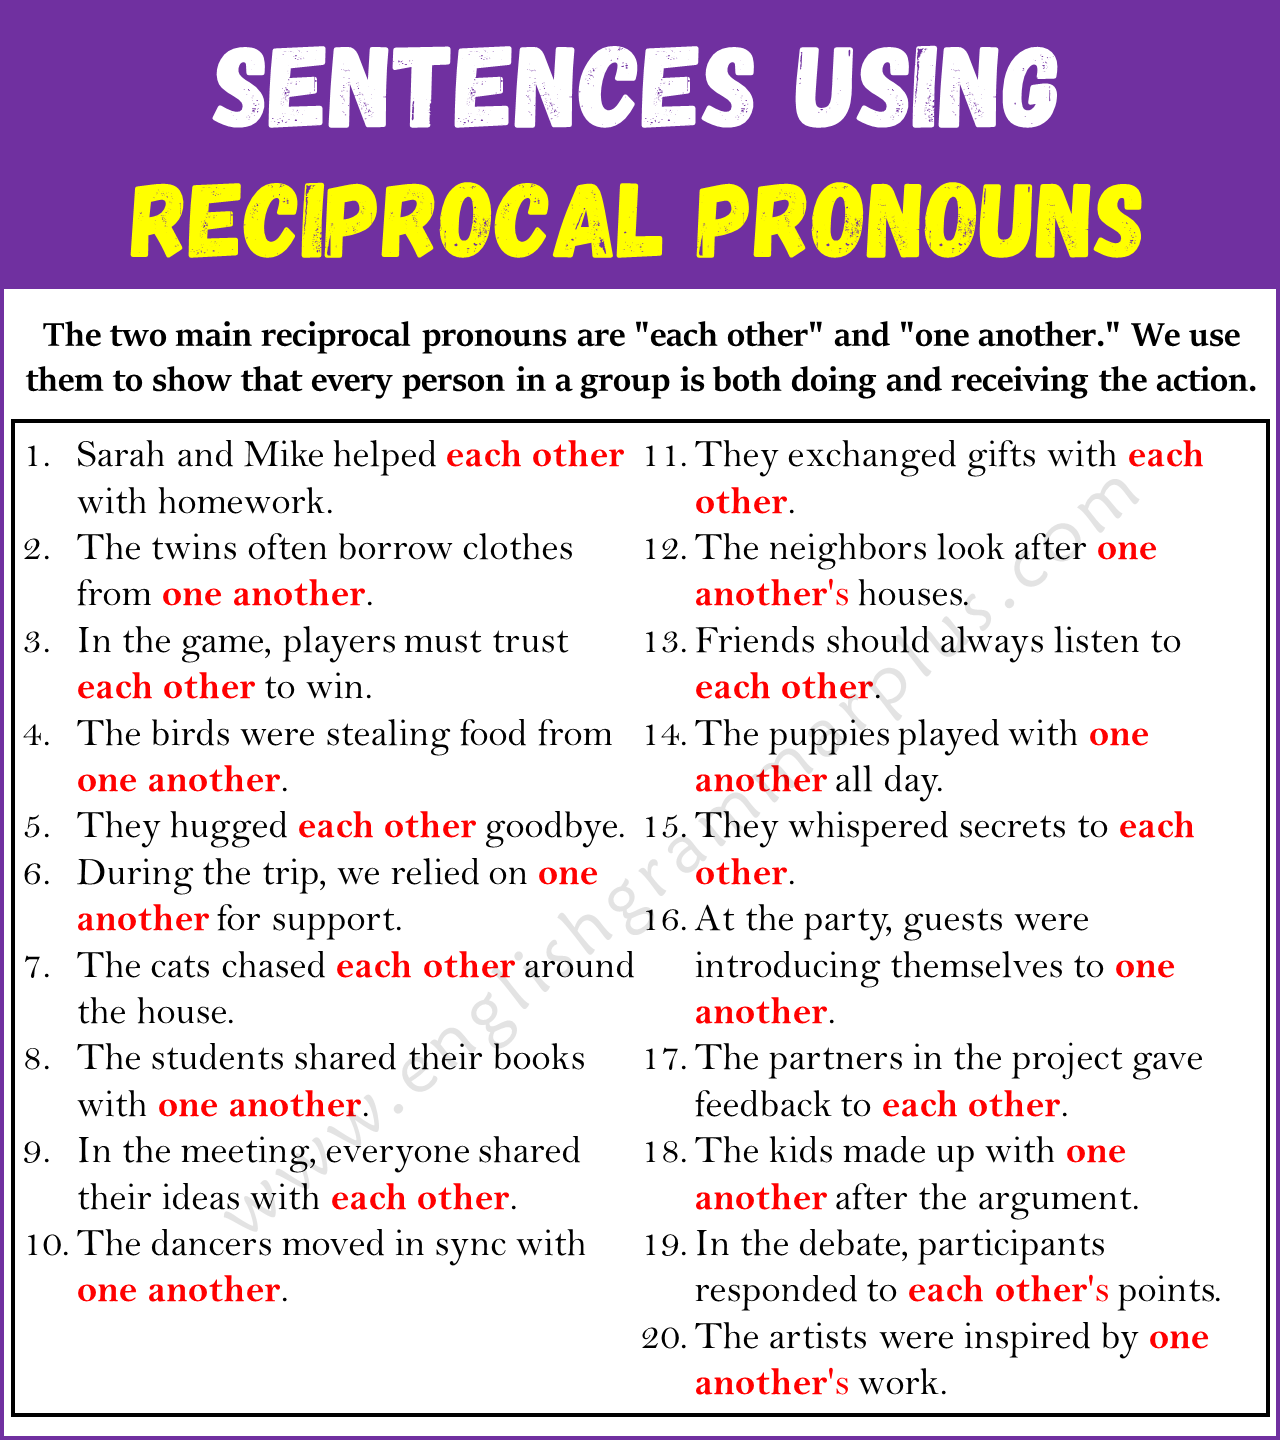 Examples of Reciprocal Pronouns in Sentences